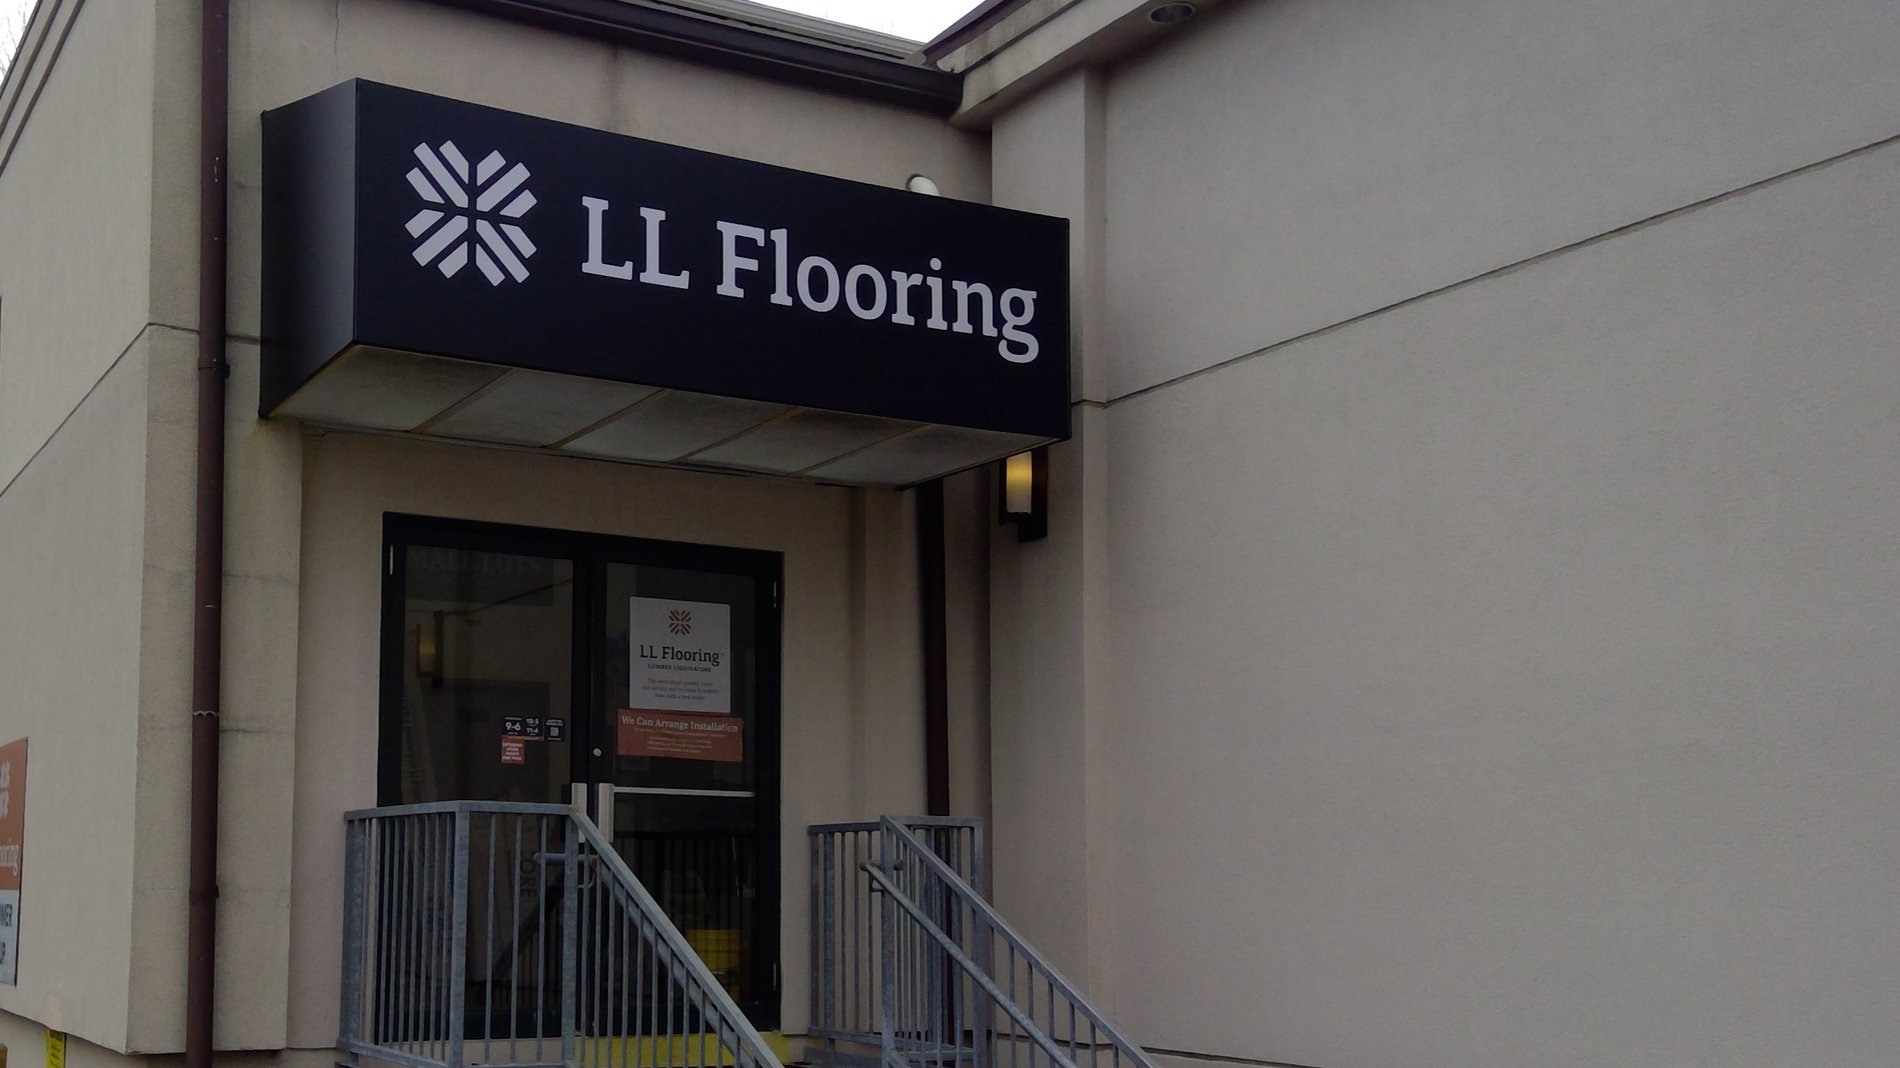 LL Flooring #1094 Norwalk | 651 Connecticut Avenue | Storefront